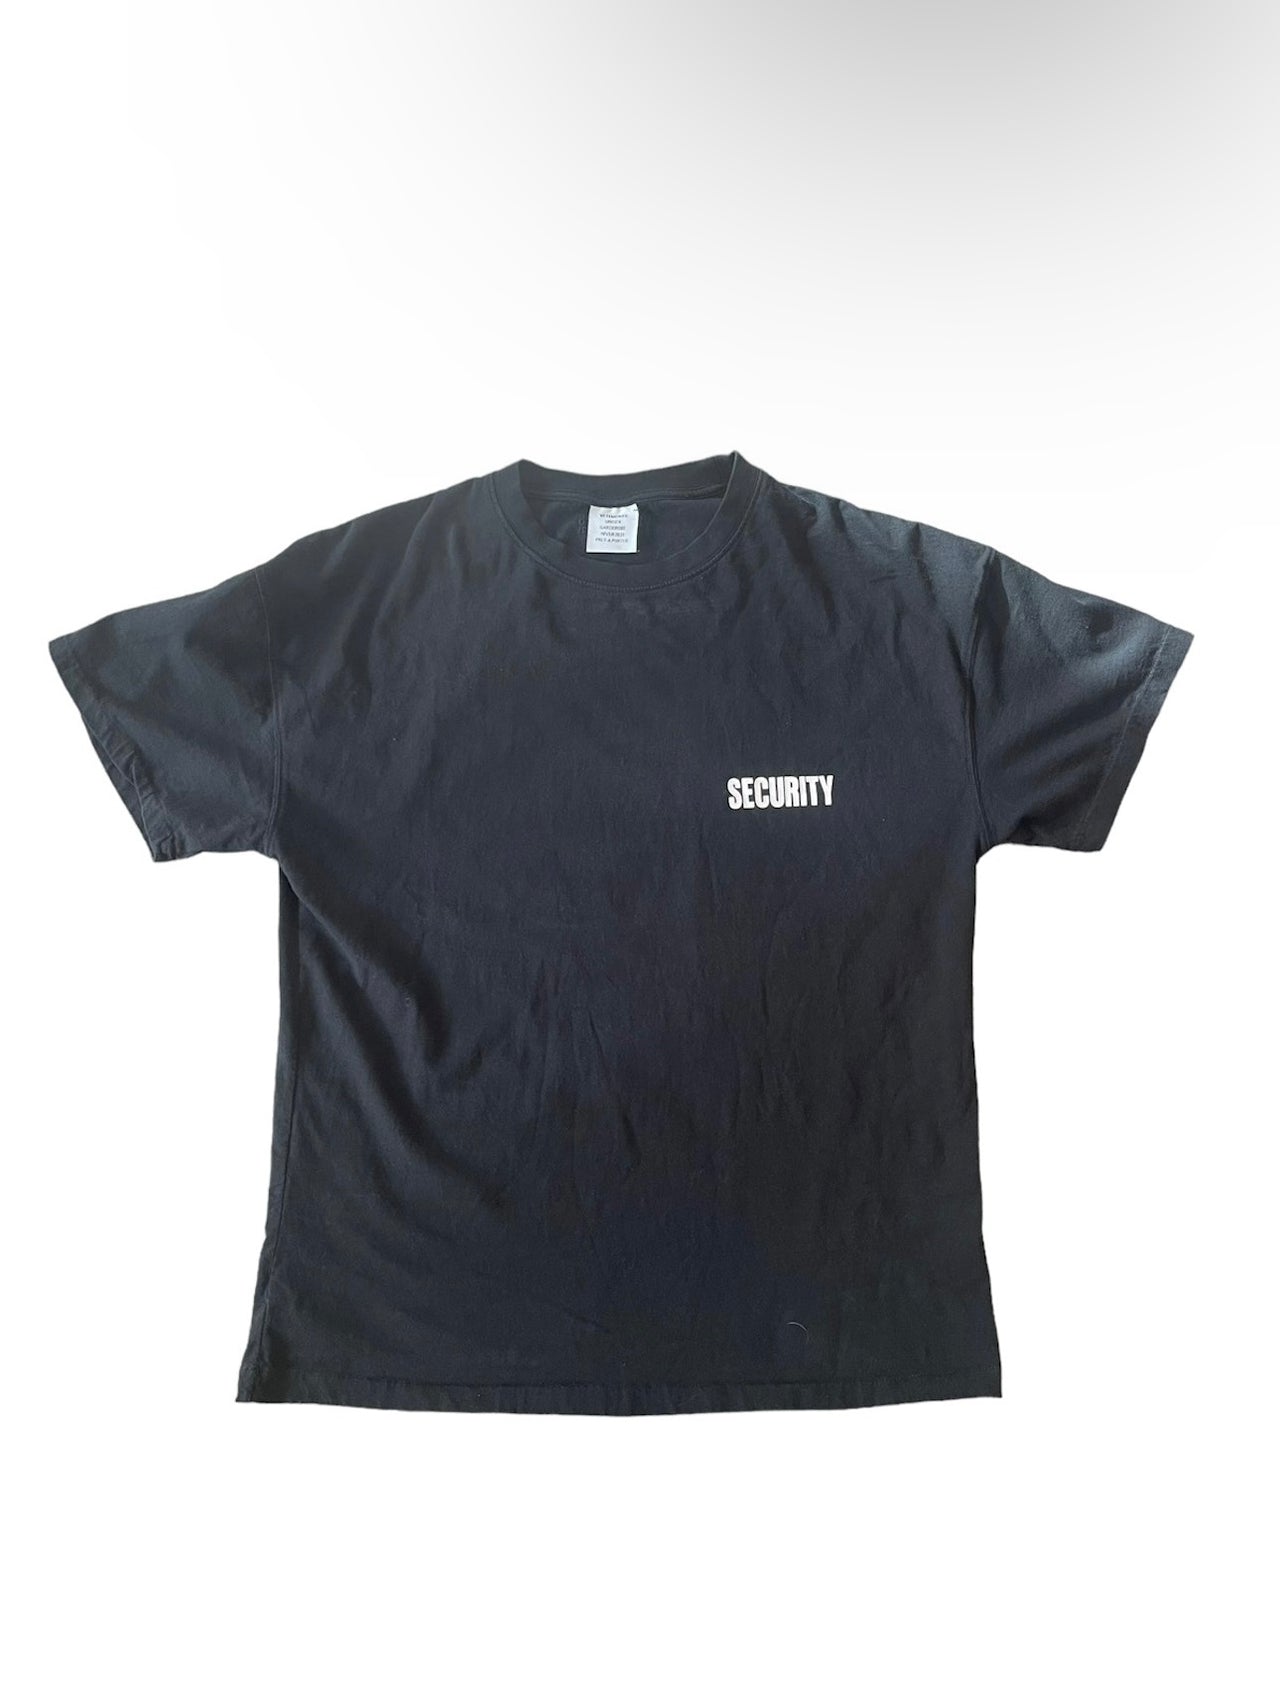 Vetements Security T-Shirt